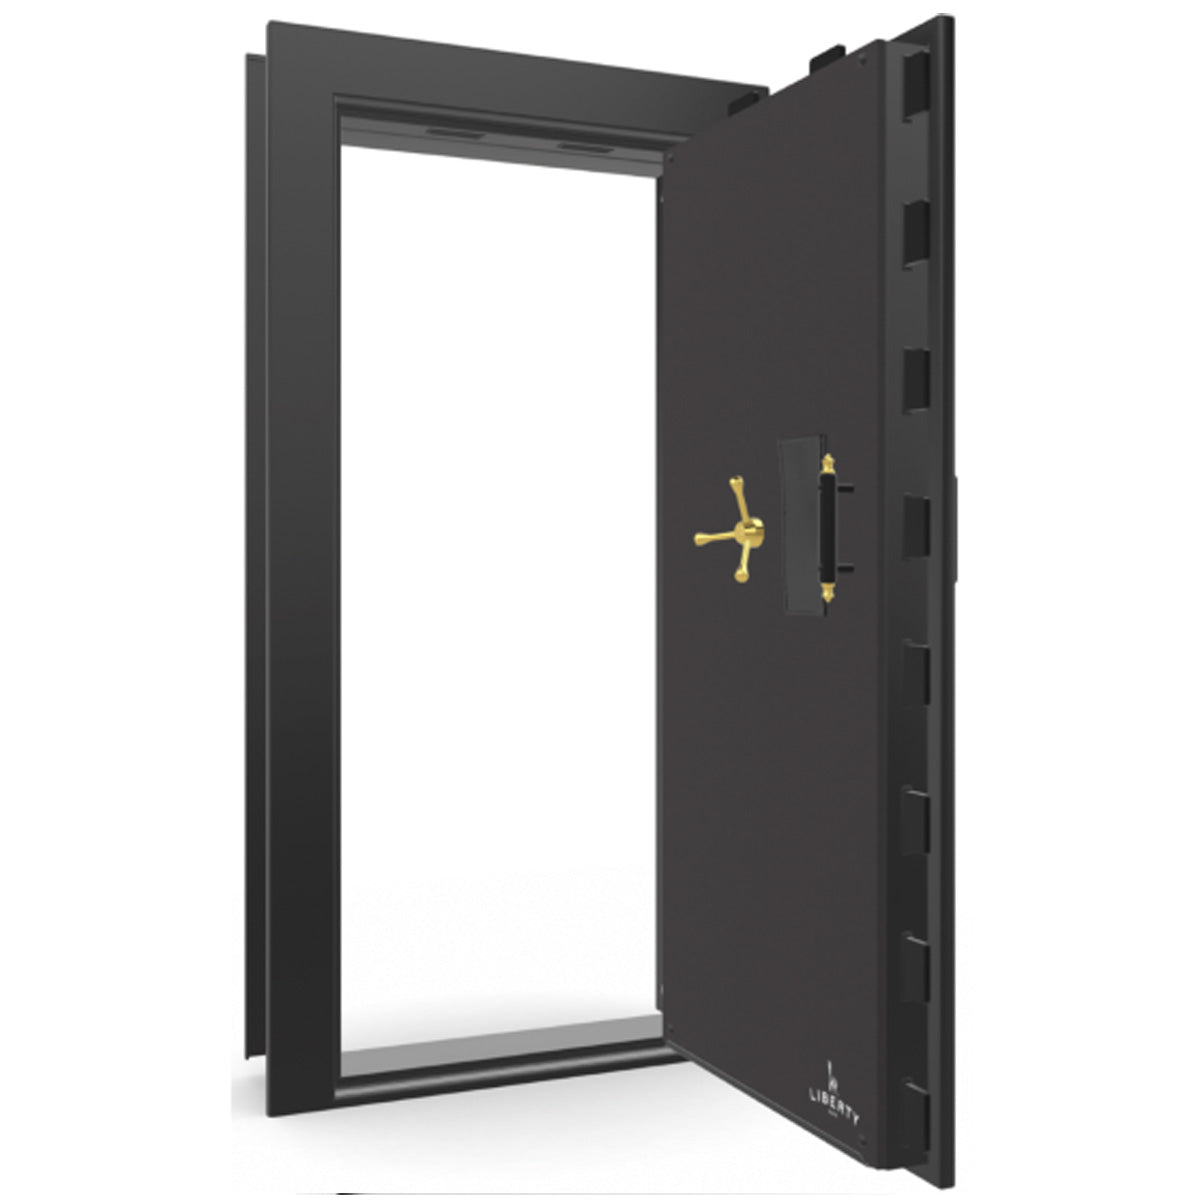 The Beast Vault Door in Black Gloss with Brass Electronic Lock, Right Outswing, door open.